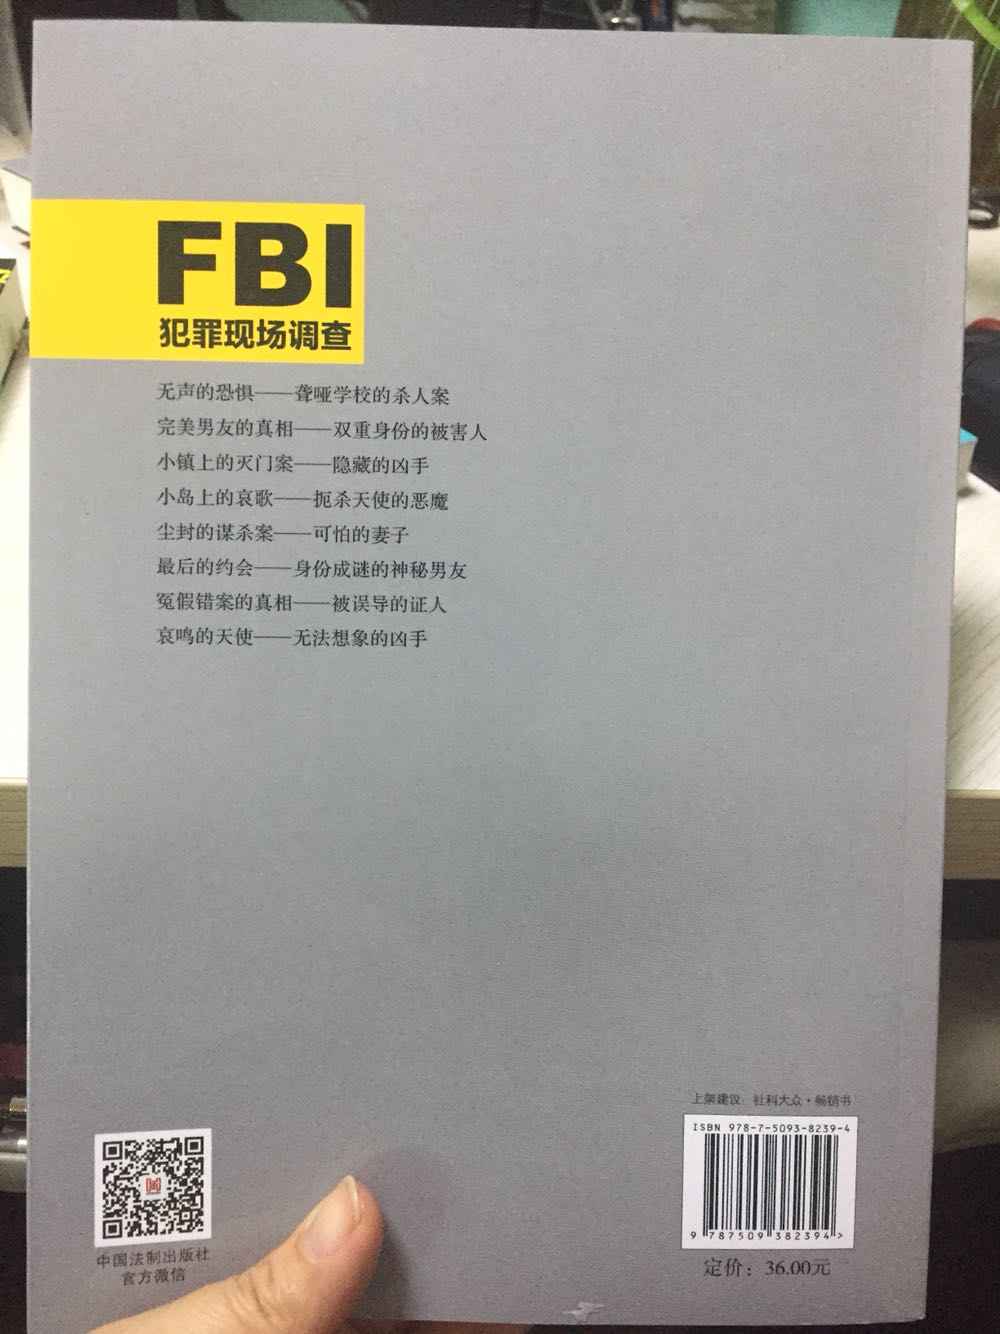 FBI犰犯罪现场调查在书店看过后，便放不下去，果断在商城买下，在商城里购物放心又省钱的。